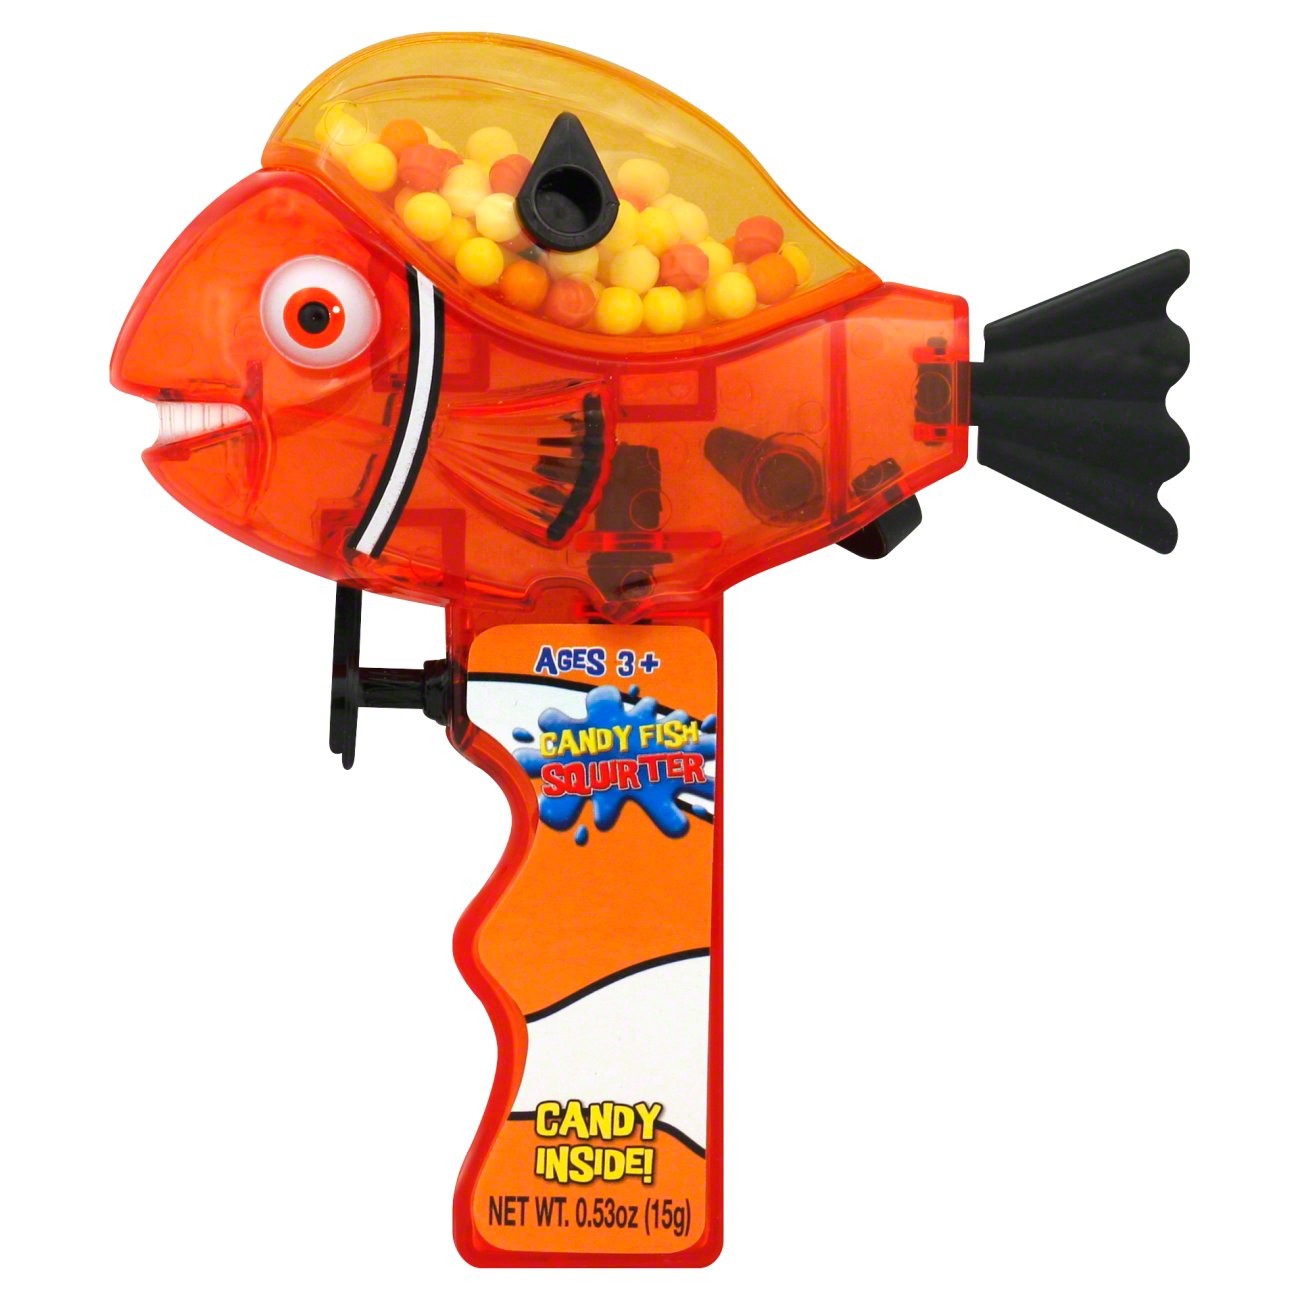 CandyRific Go Fish Squirt Fun Water Gun with Candy